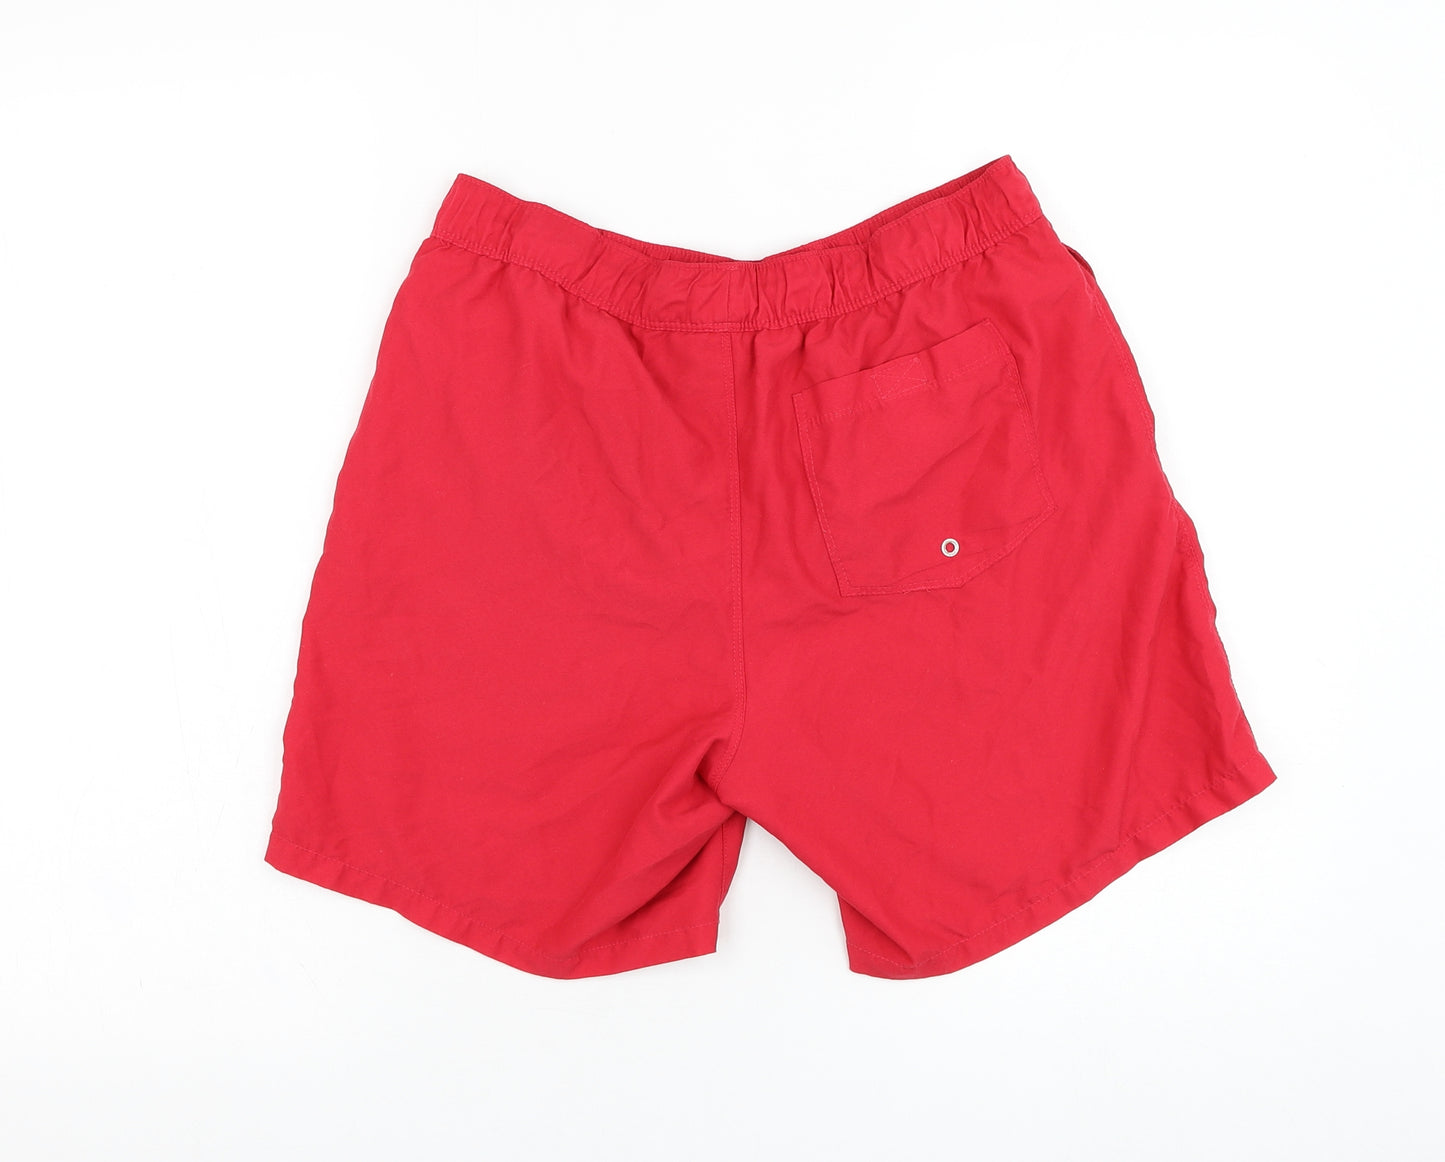 ASOS Mens Red  Polyester Sweat Shorts Size M L6 in Regular  - Swimwear